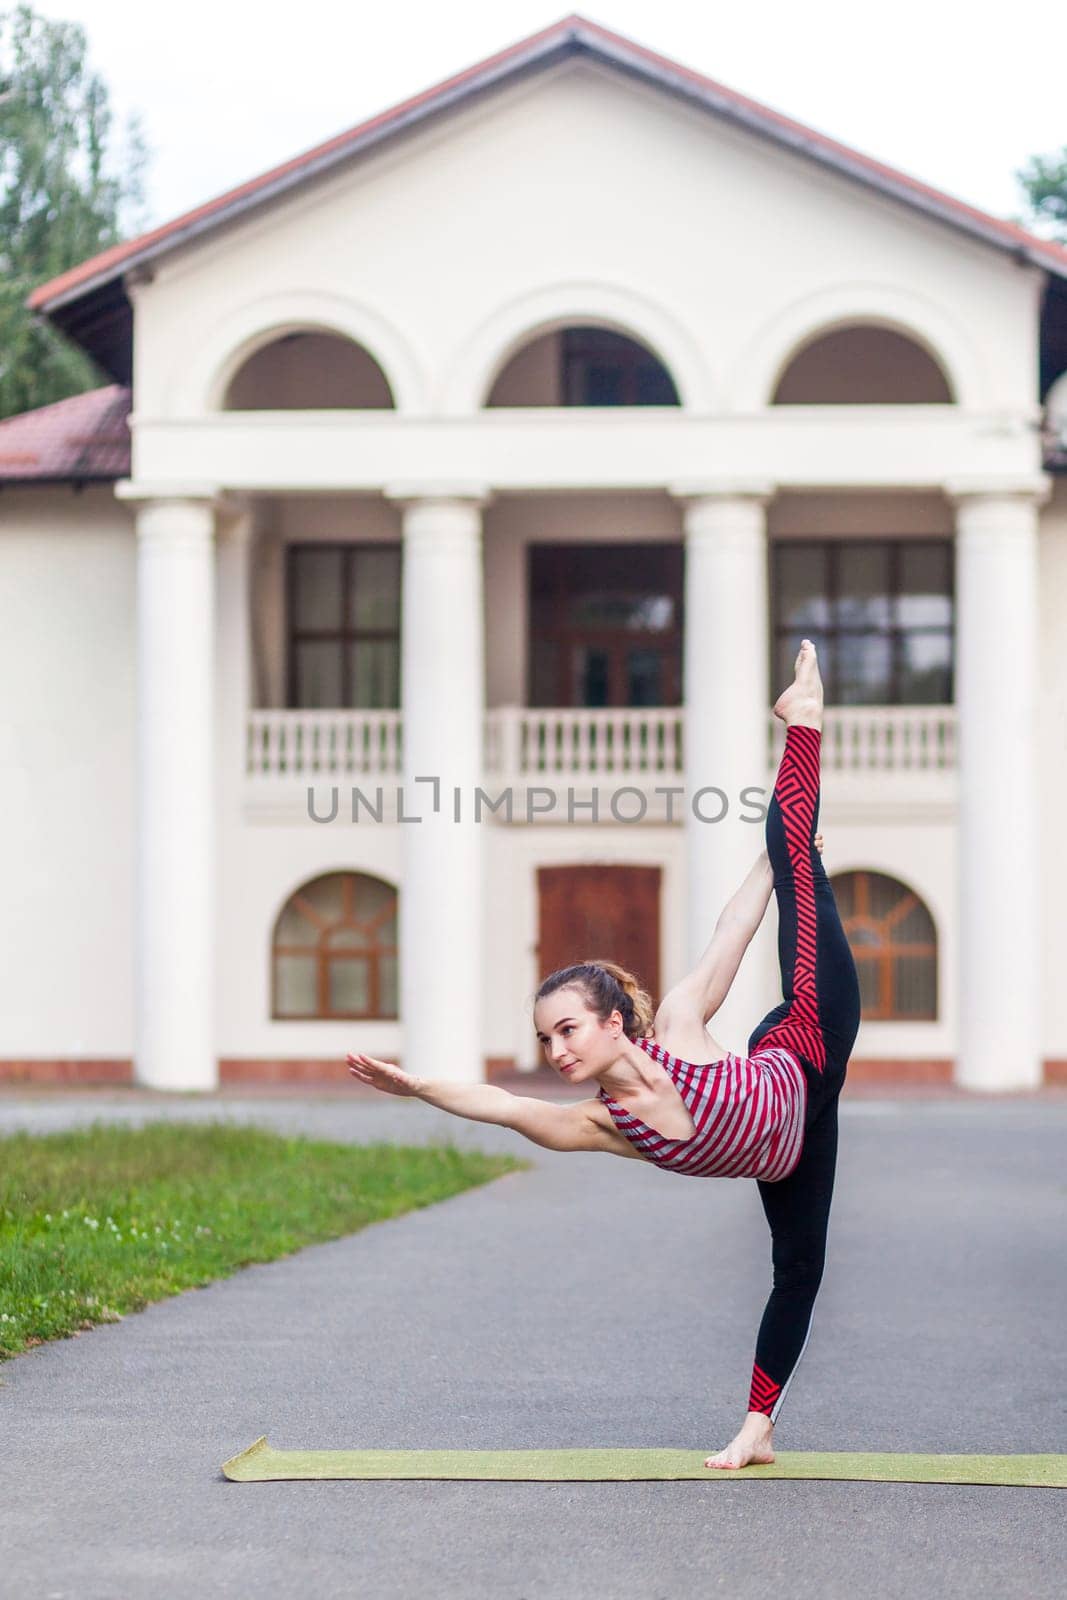 Slim woman wearing sportswear practicing yoga outdoor, doing Natarajasana exercise on one leg, by Khosro1